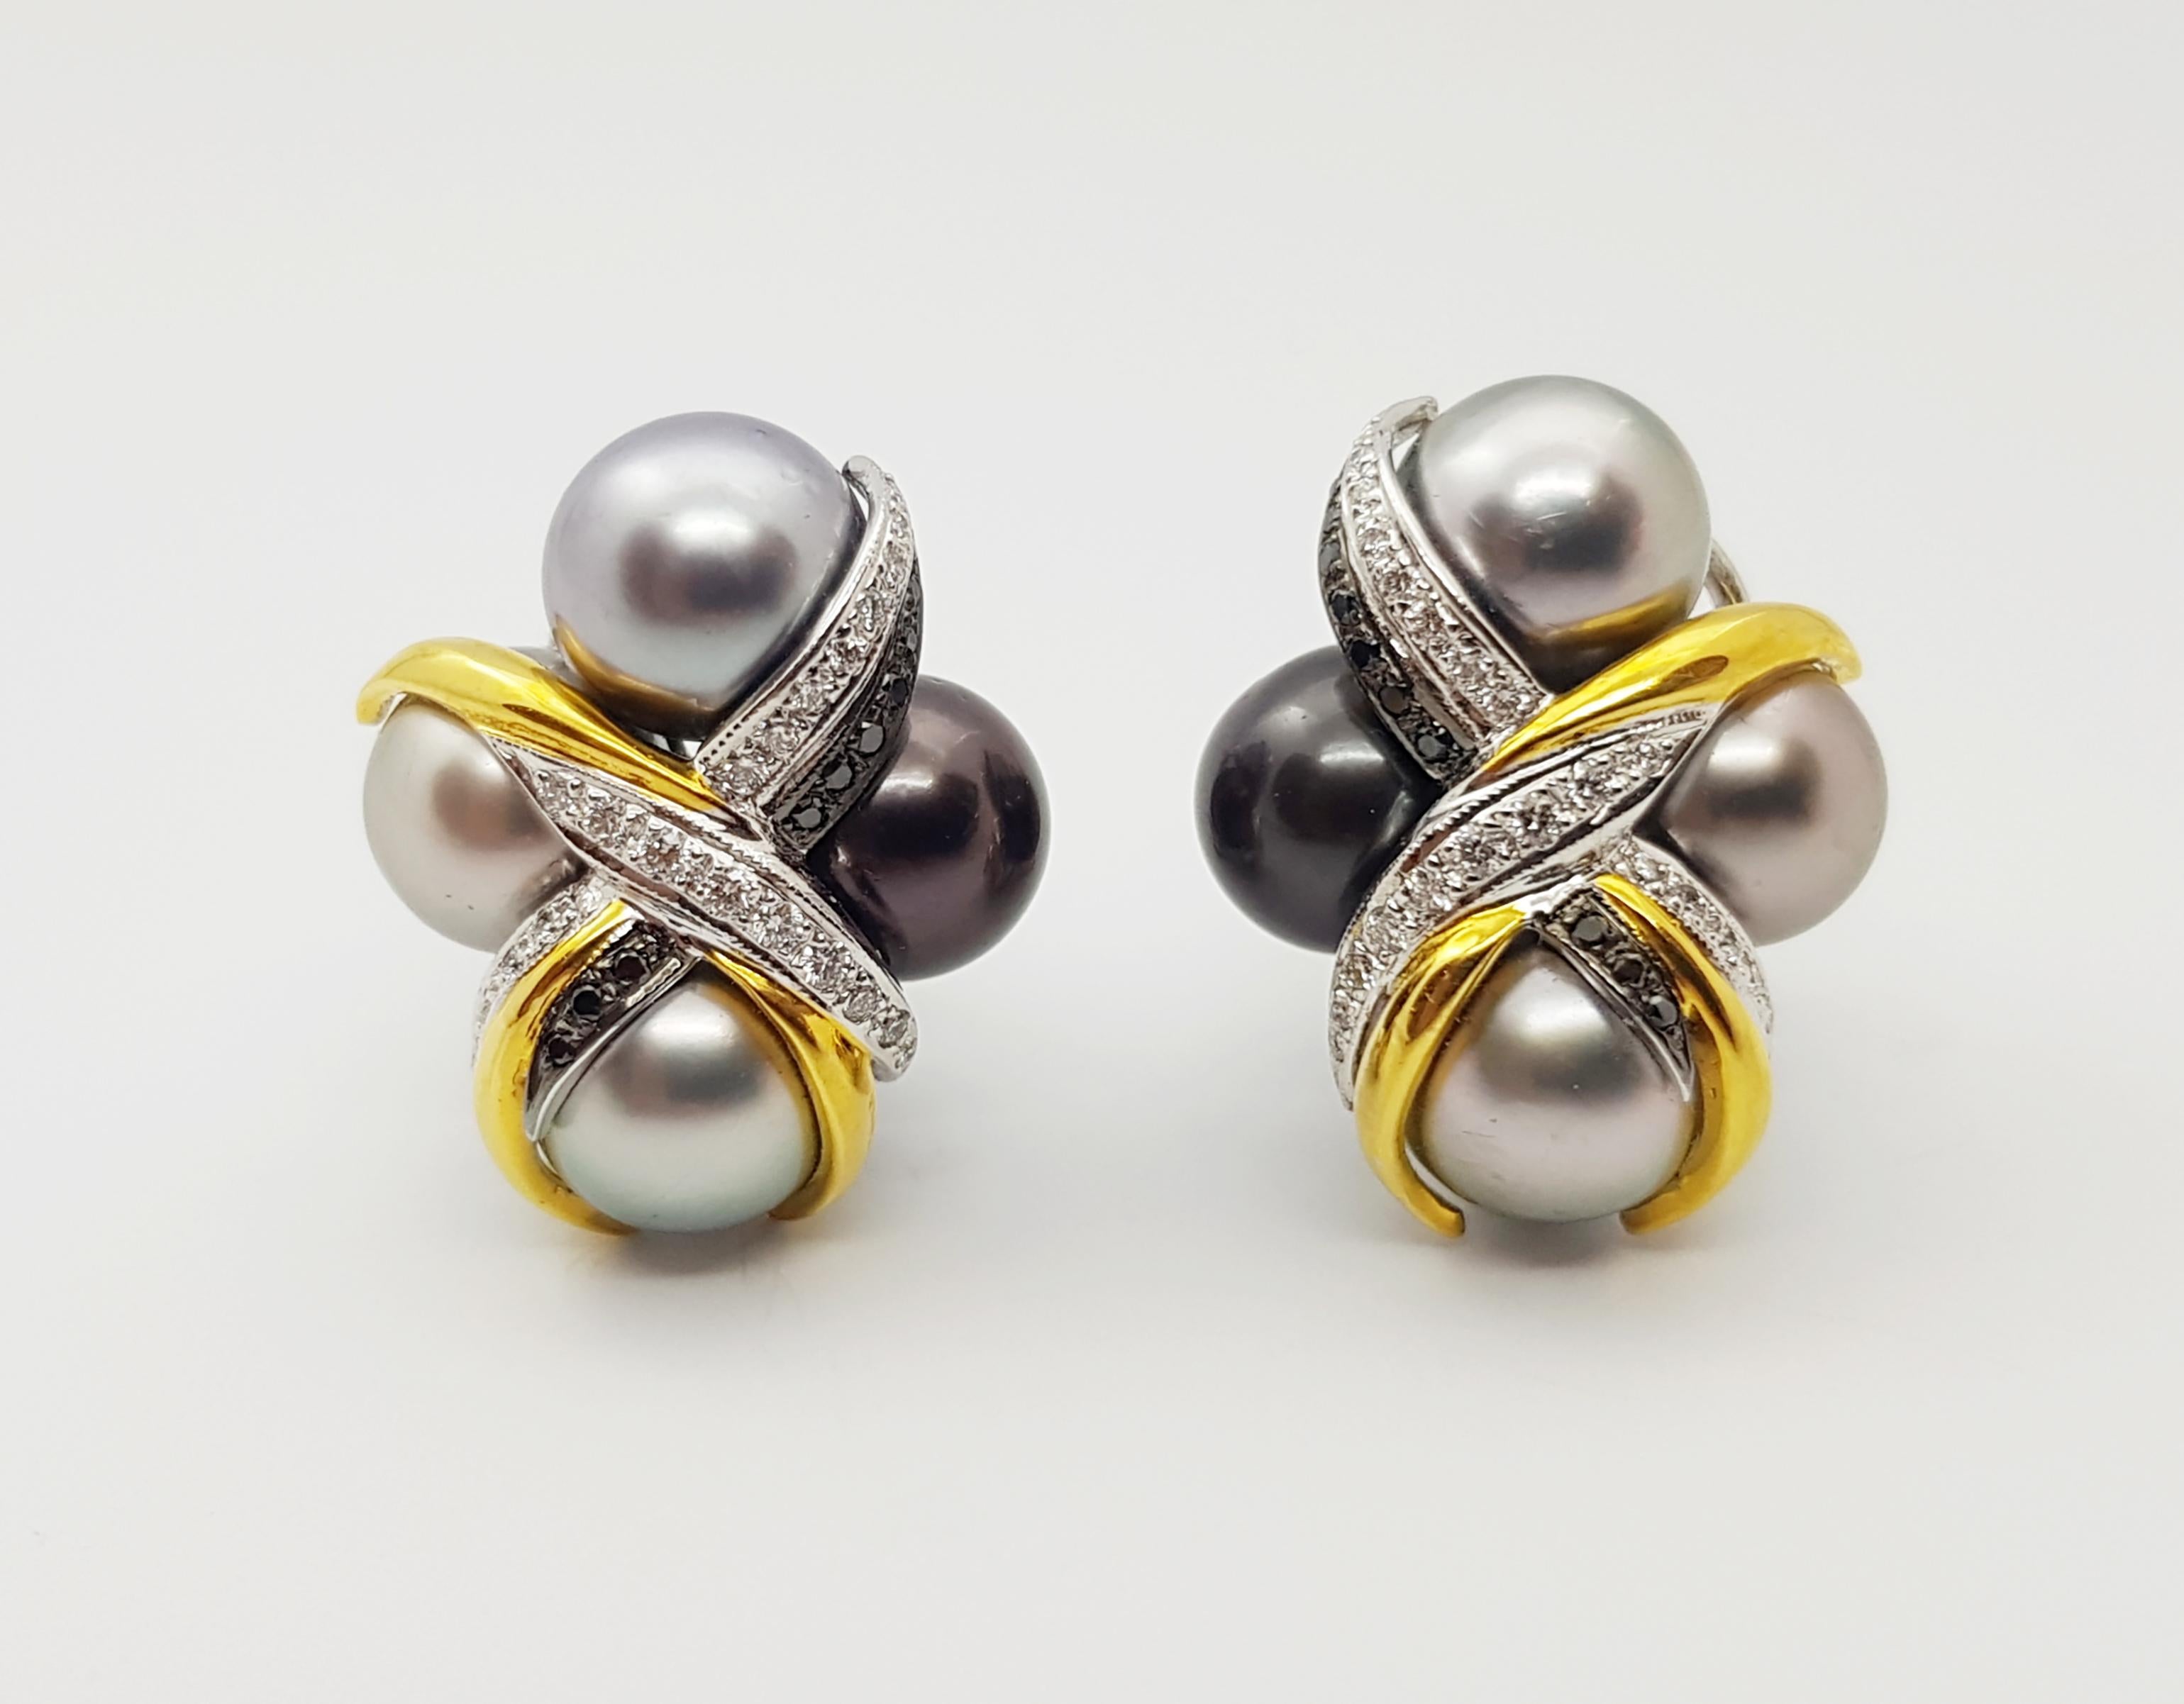 South Sea Pearl, Diamond 0.42 carat and Black Diamond 0.15 carat Earrings set in 18 Karat White Gold Settings

Width:  2.1 cm 
Length:  2.5 cm
Total Weight: 24.51 grams

